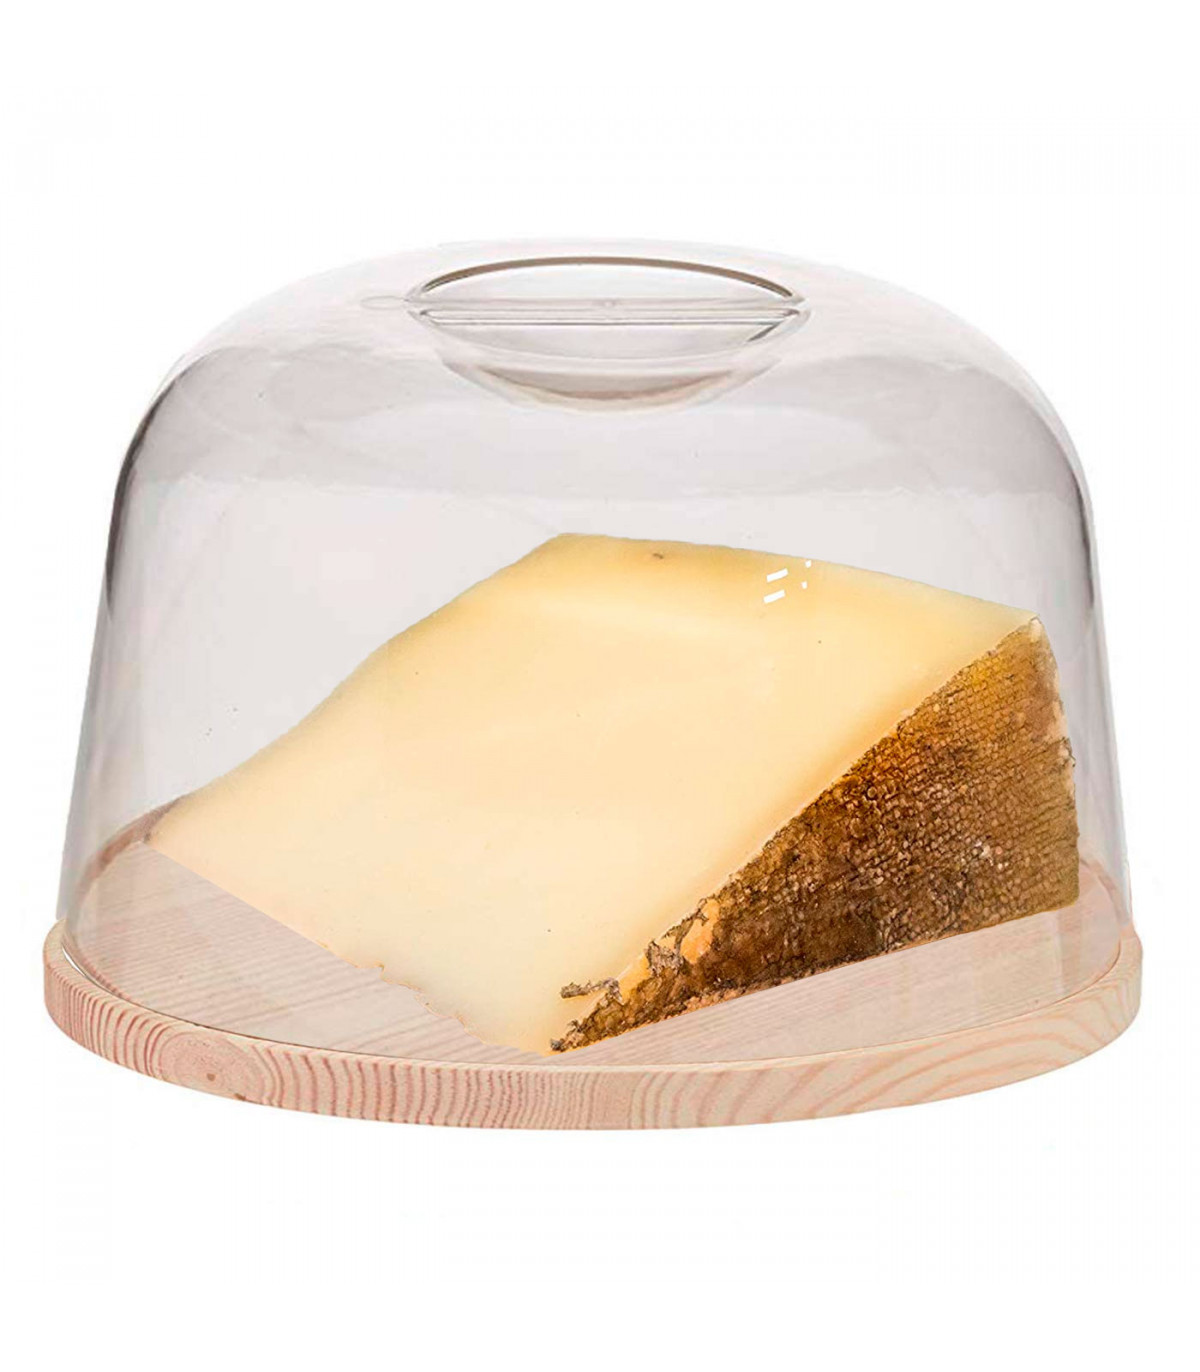 Artema - Quesera redonda, tapa transparente de metacrilato y base de  madera, recipiente para guardar queso o embutidos, 22 cm